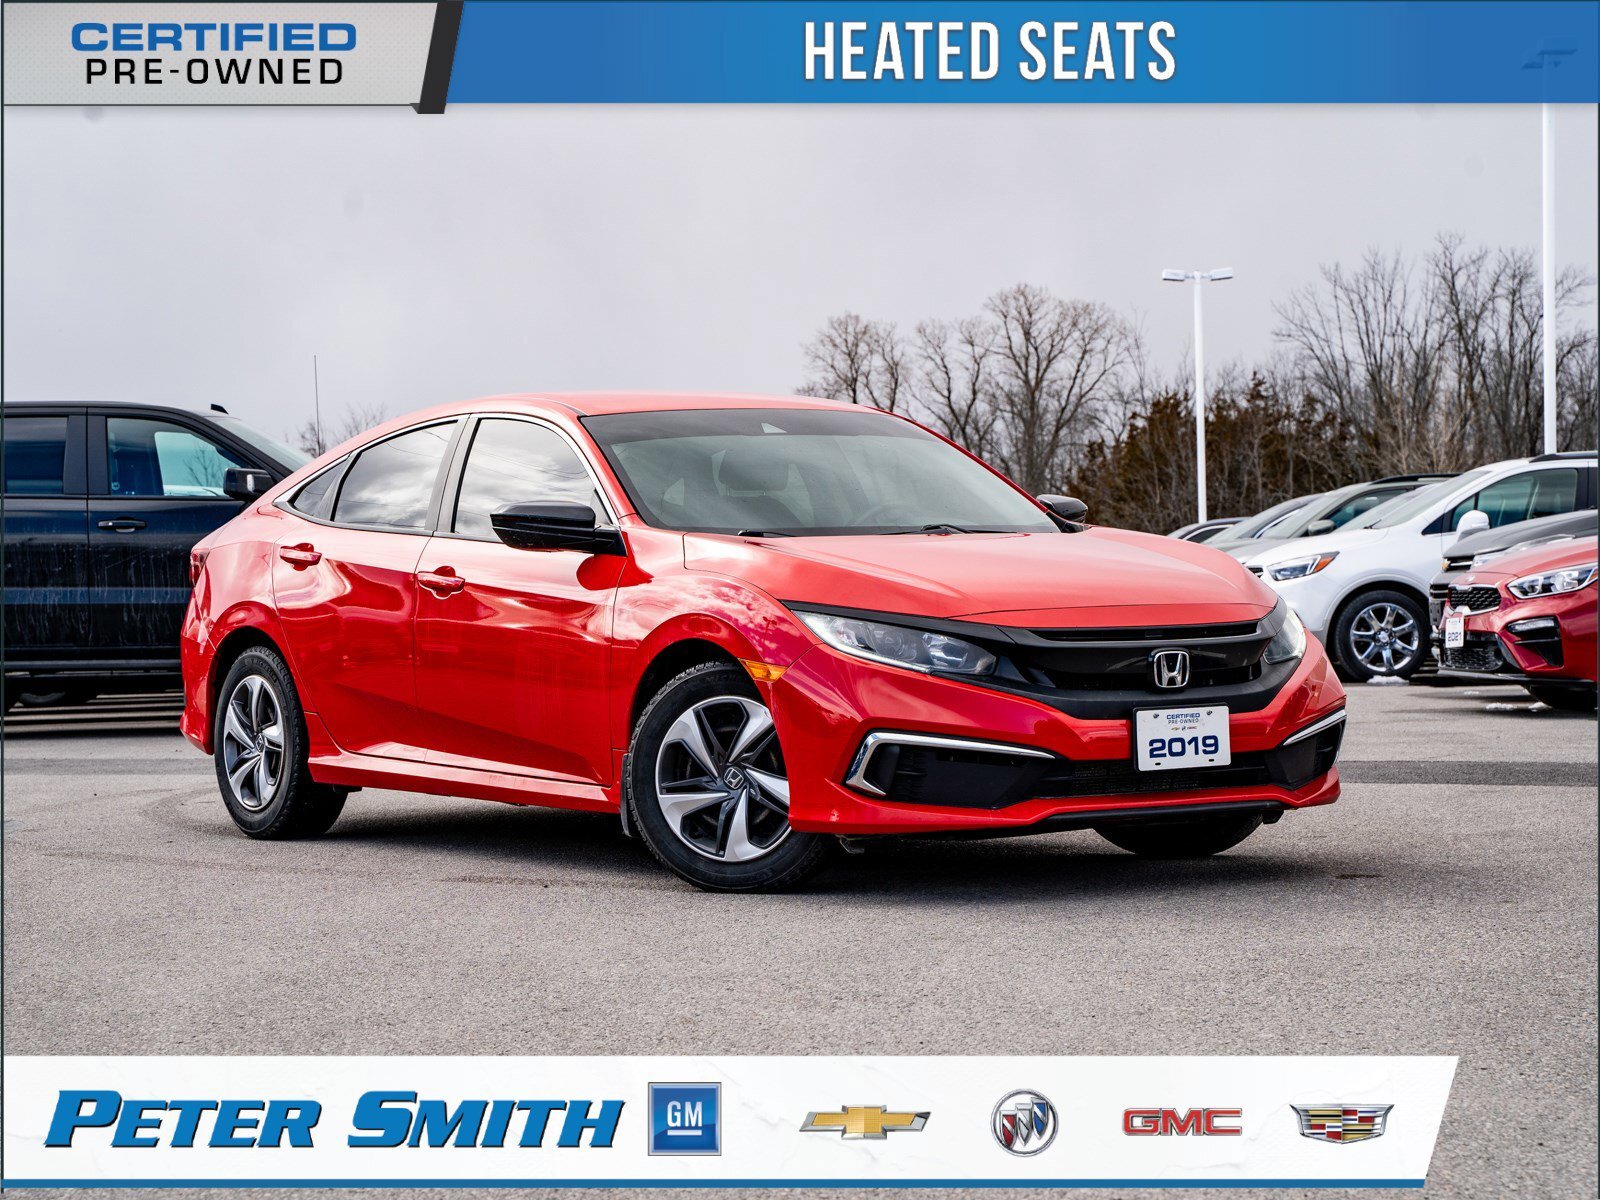 2019 Honda Civic Sedan LX - 2.0L I-4 DOHC i-VTEC | Heated Front Seats | A